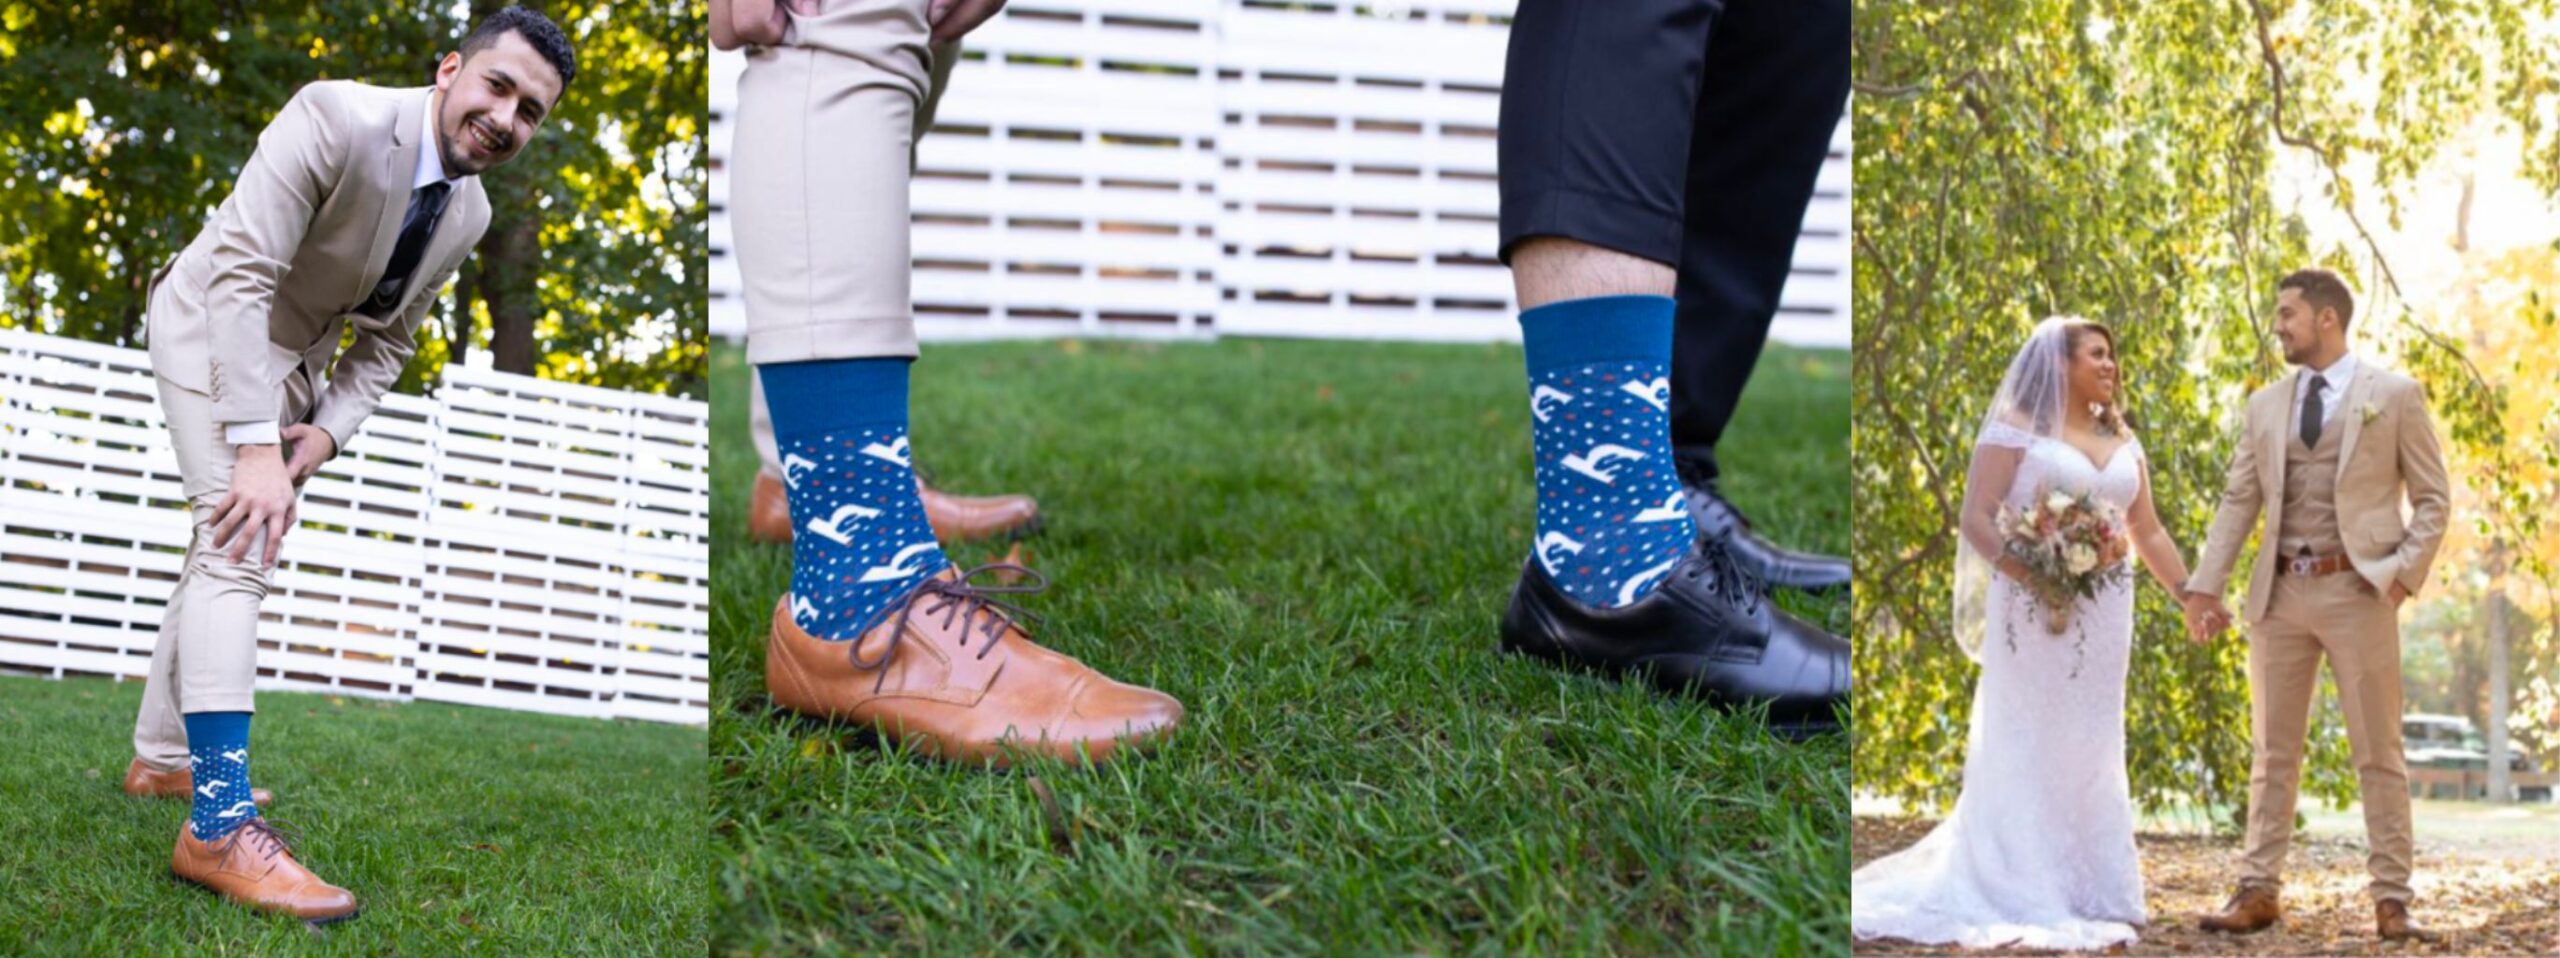 Three photos from Ramon's wedding wear he's wearing the HCSG socks.